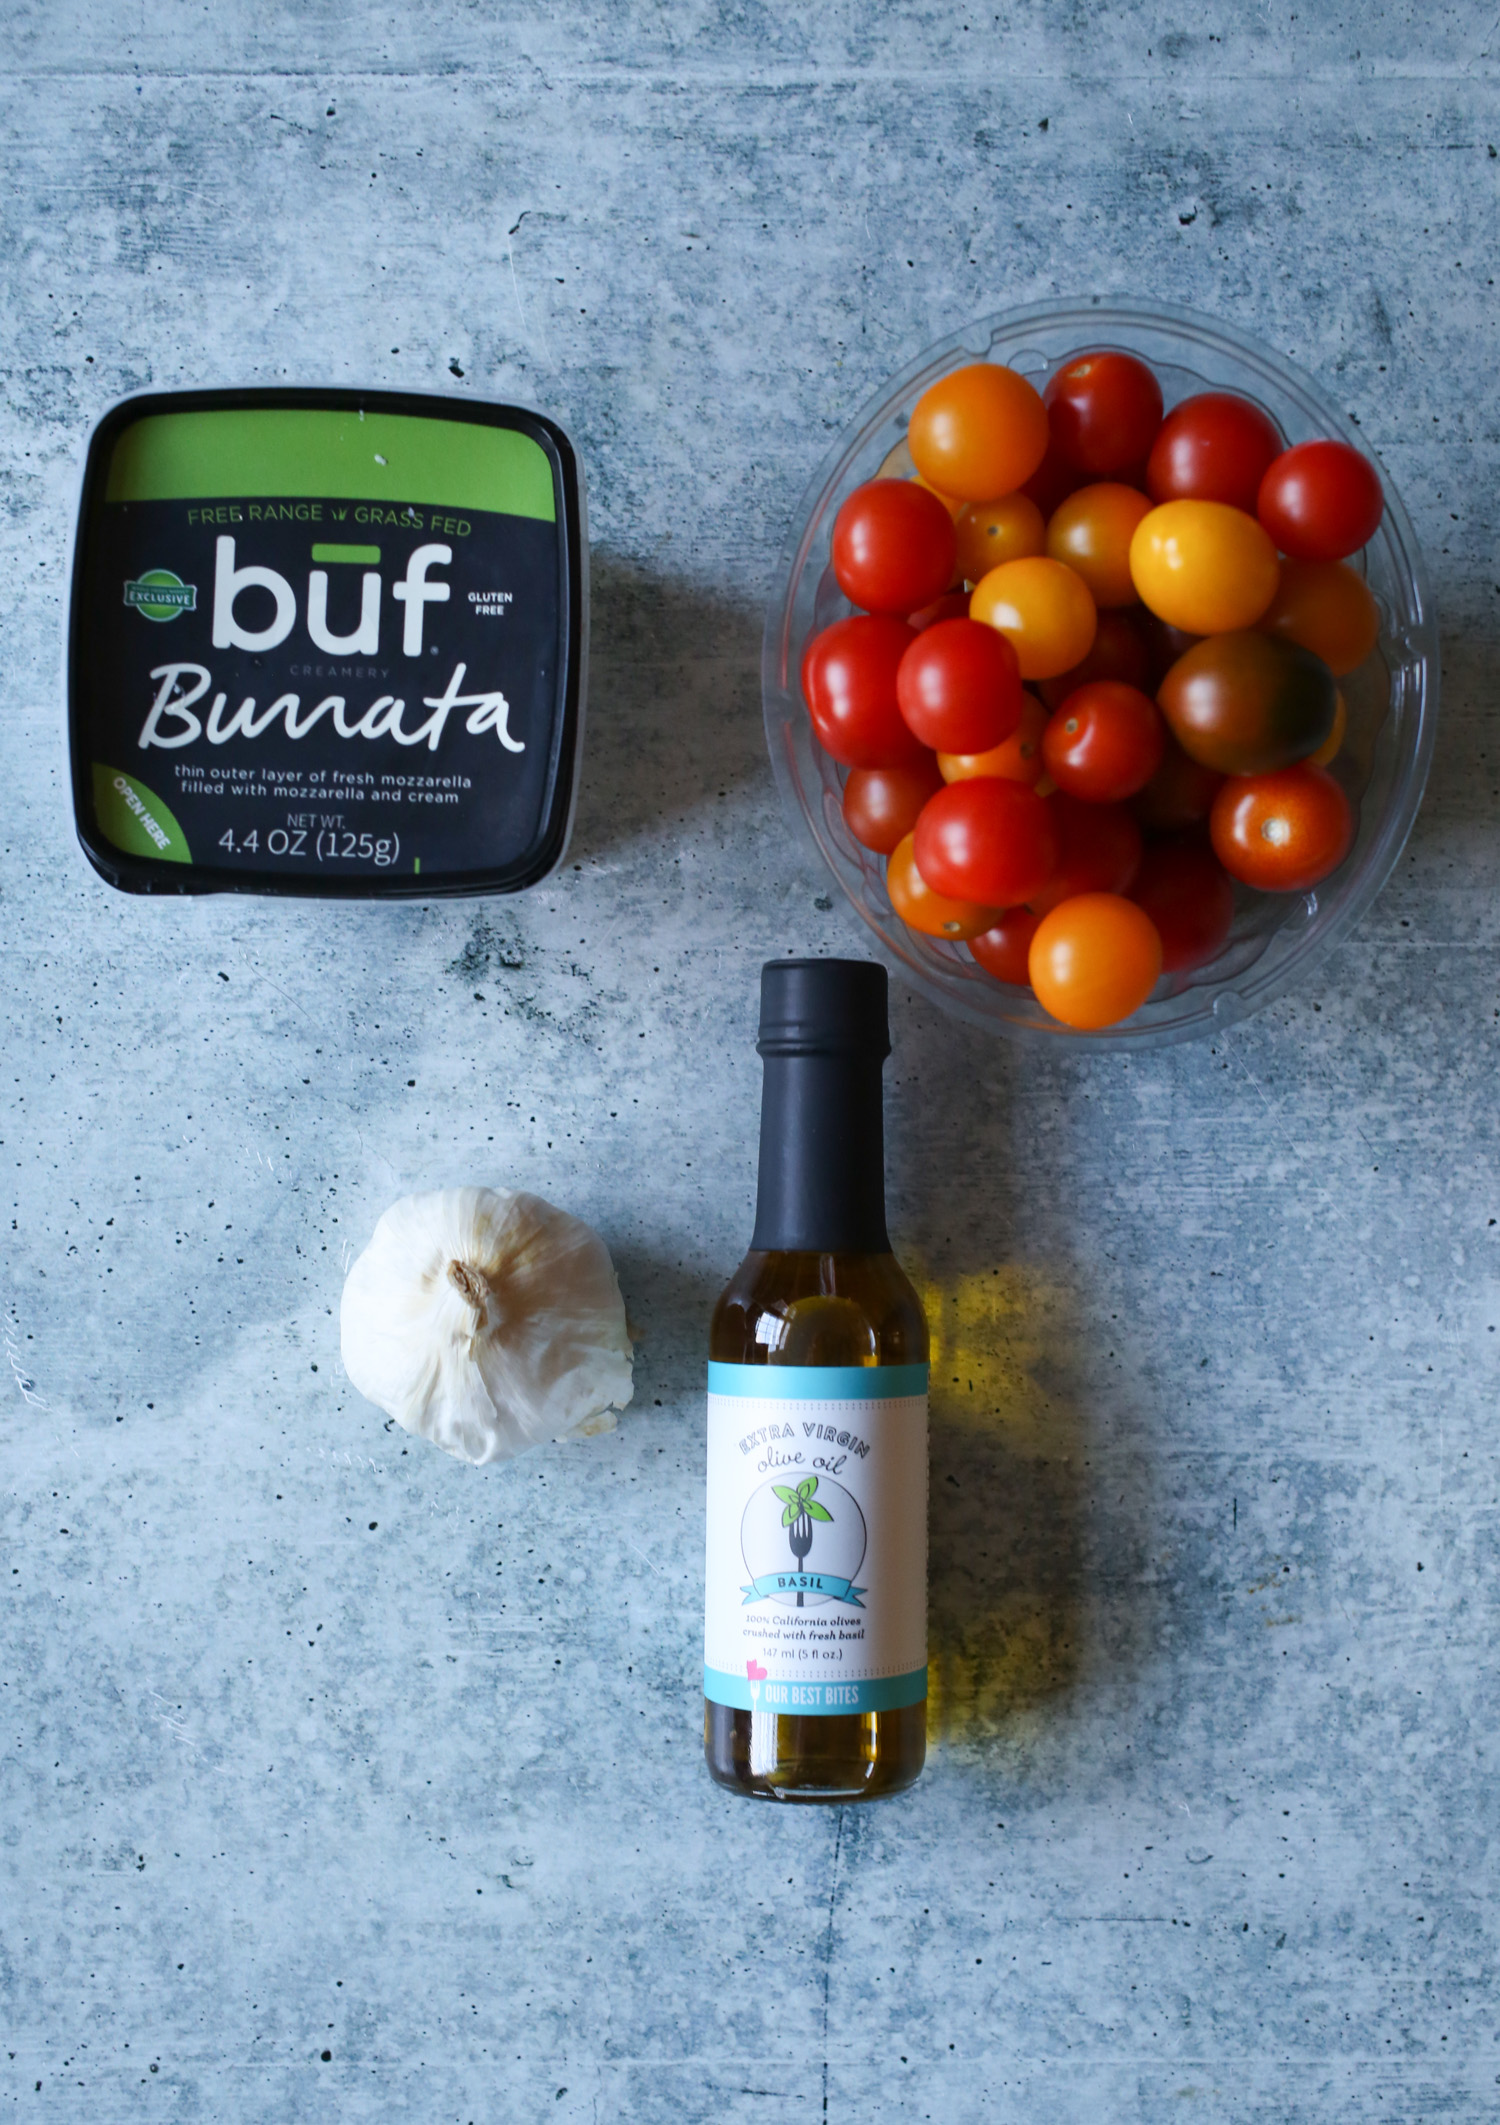 burrata, garlic, olive oil, and baby tomatoes